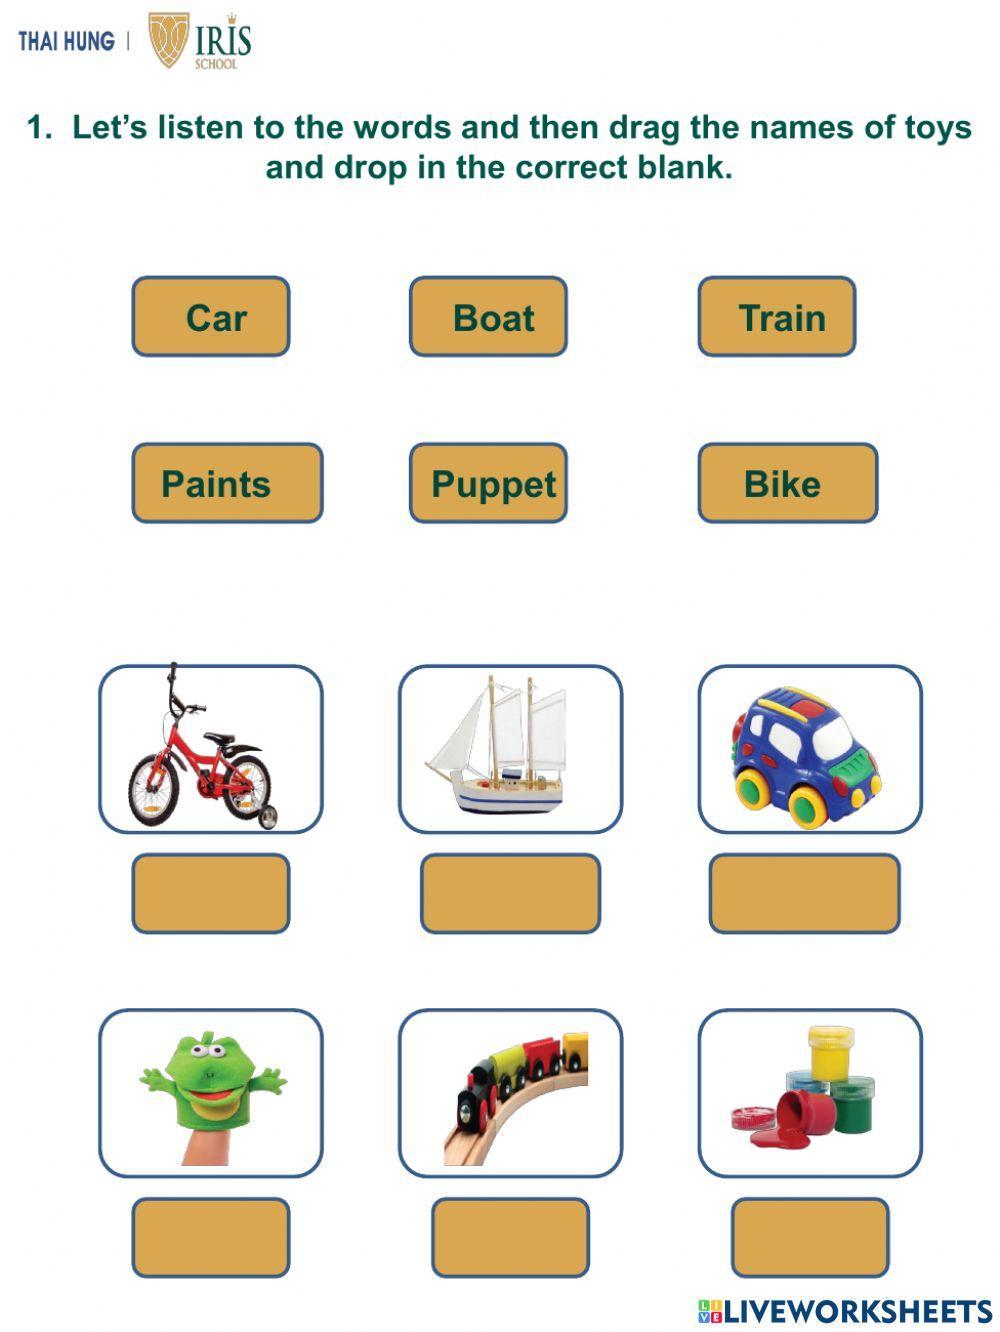 Rainbow-Worksheet about Toys for Kids worksheet | Live Worksheets